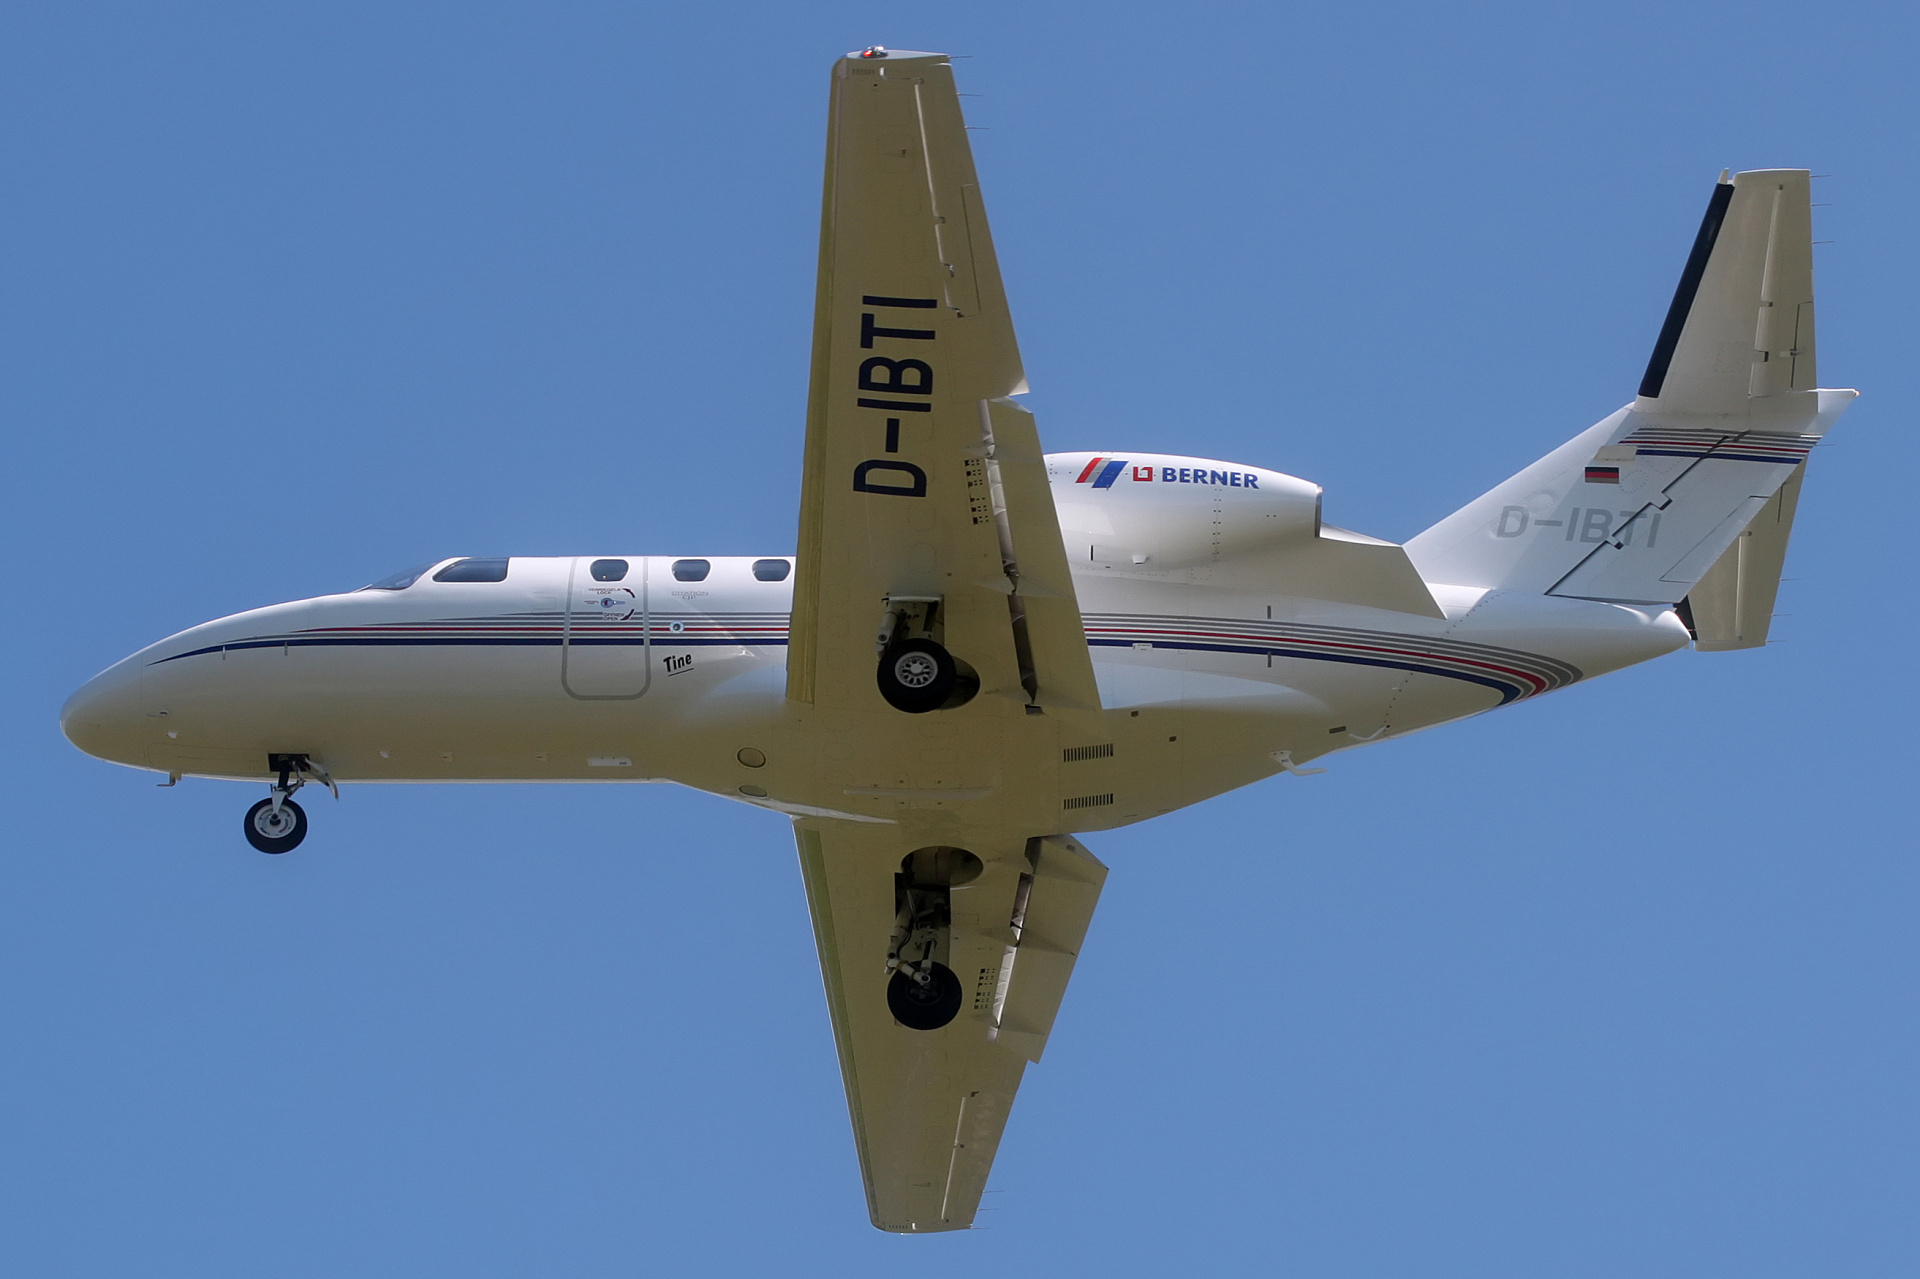 D-IBTI, Berner (Aircraft » EPWA Spotting » Cessna 525 (CitationJet) and revisions)